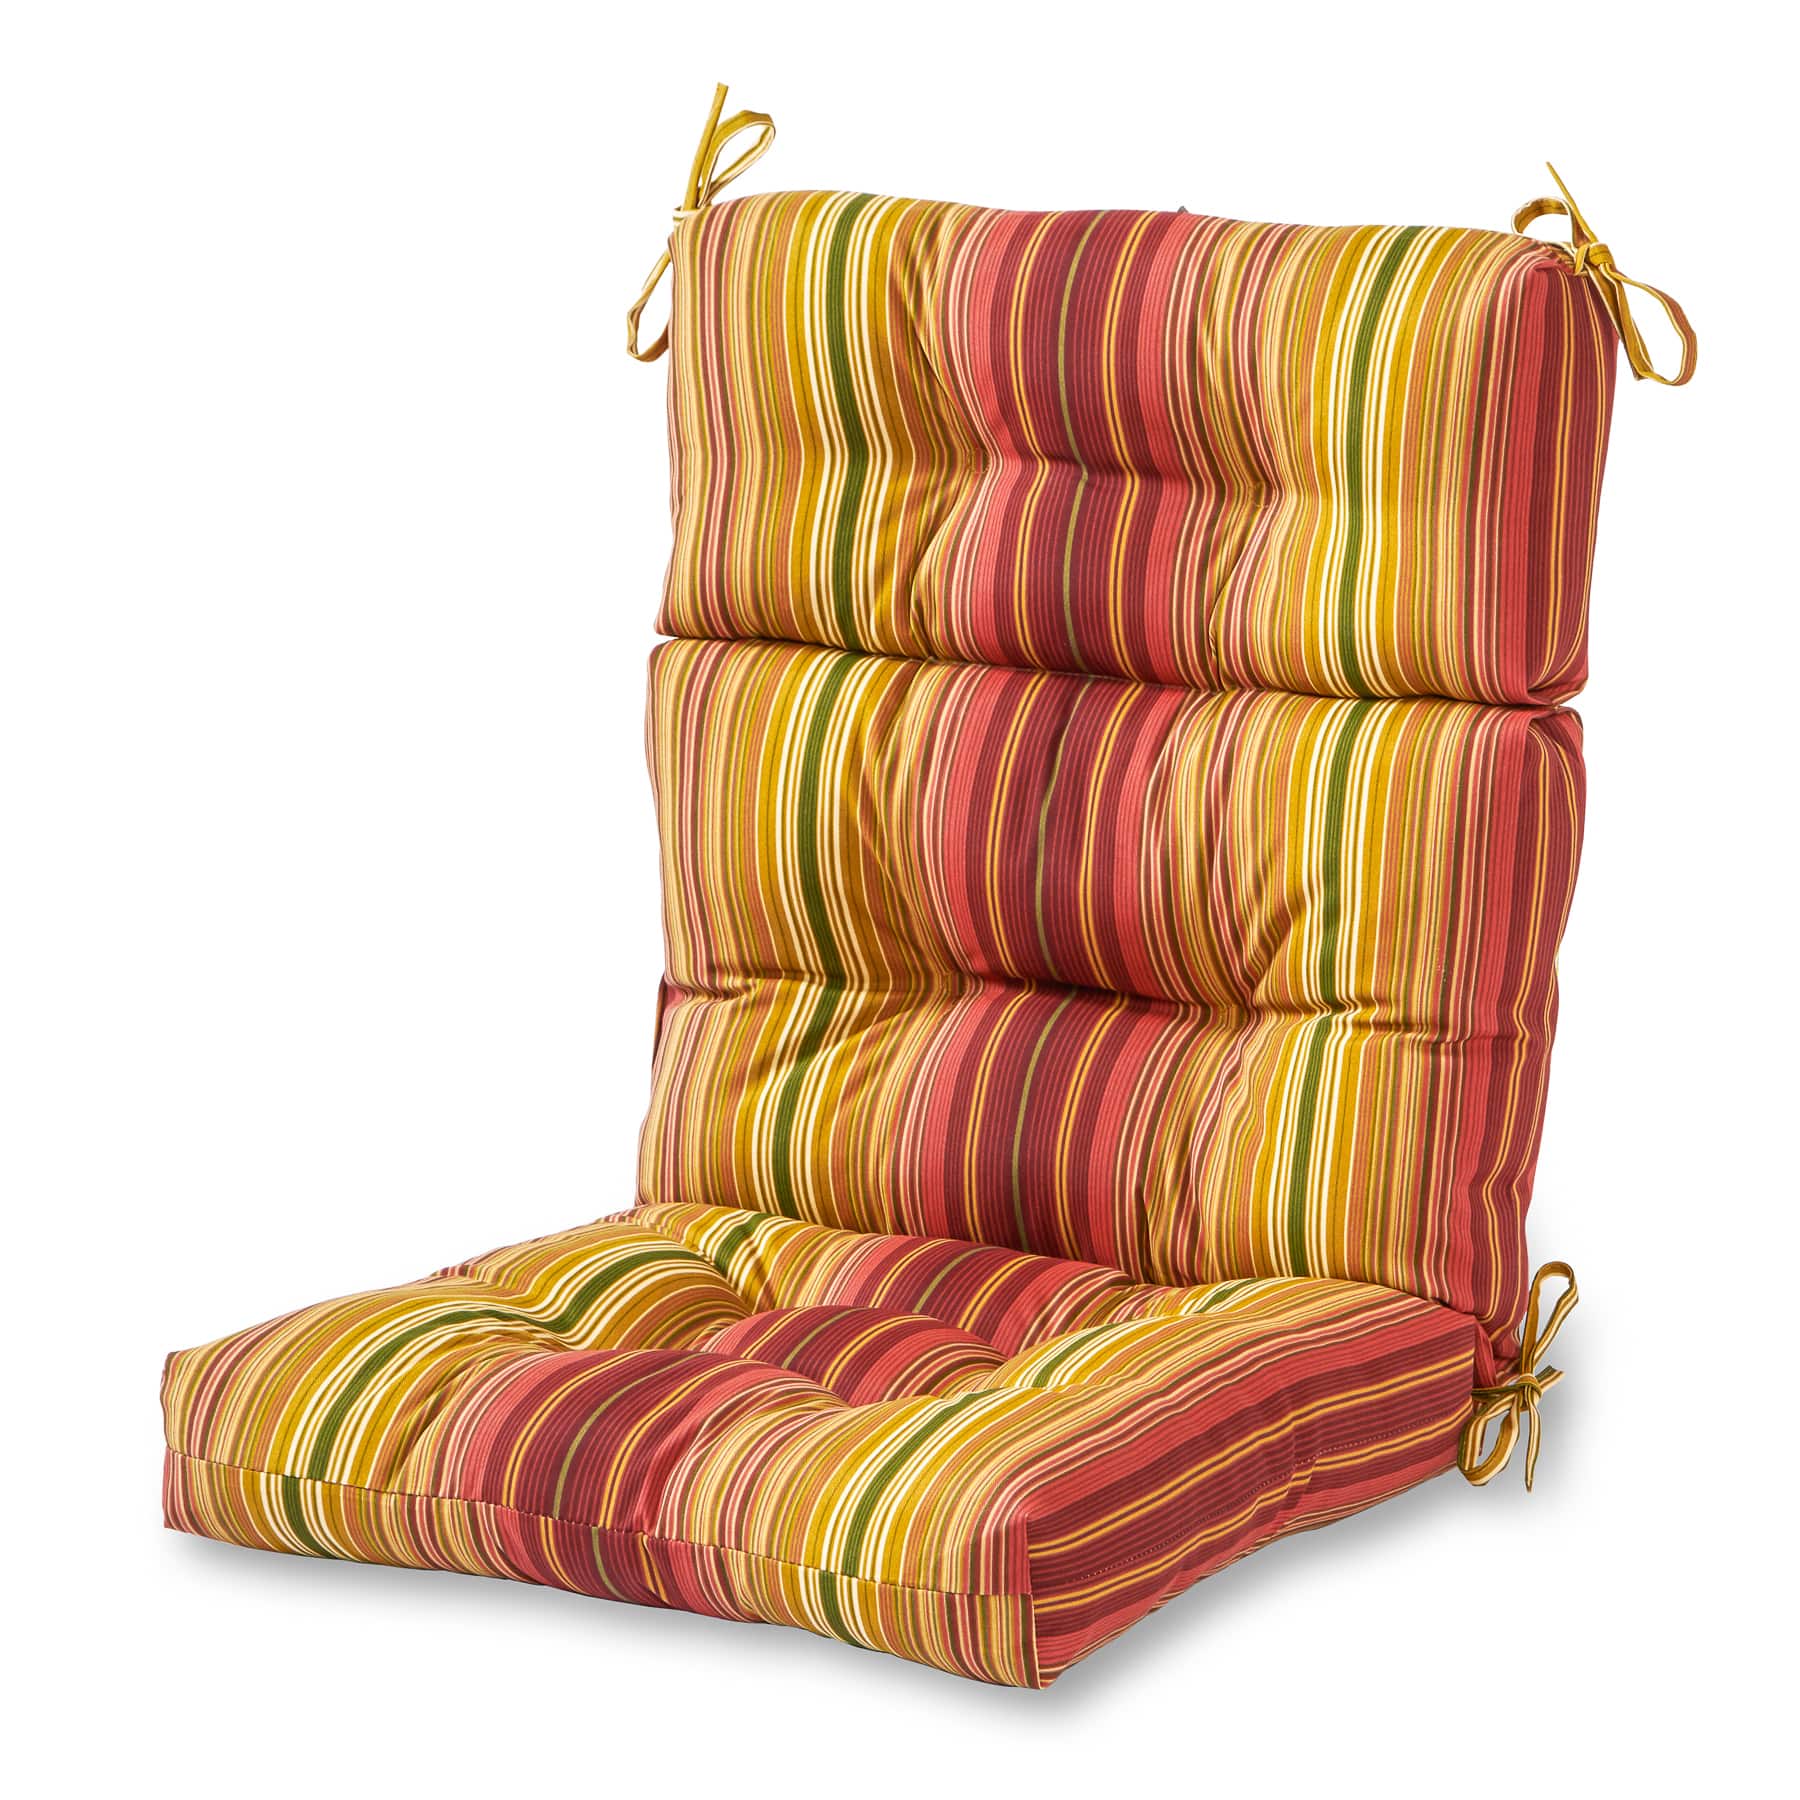 44x22 Inch 3 Section Outdoor Kinnabari Stripe High Back Chair Cushion C2640585 4a0a 44d9 Bcea 417bd5f5923f ?impolicy=medium